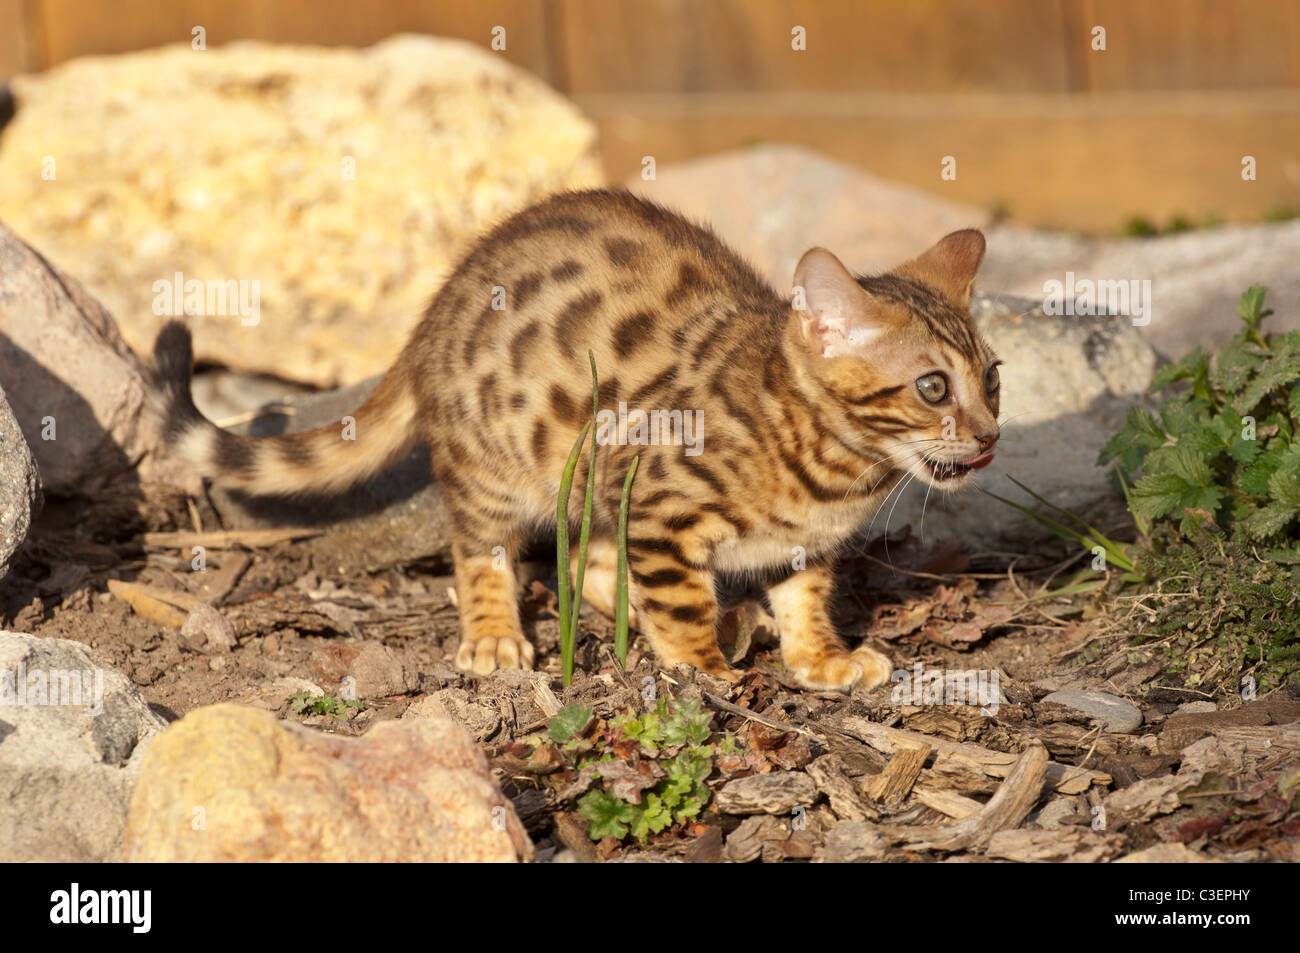 Stock photo of a bengal kitten in a rock garden. Stock Photo